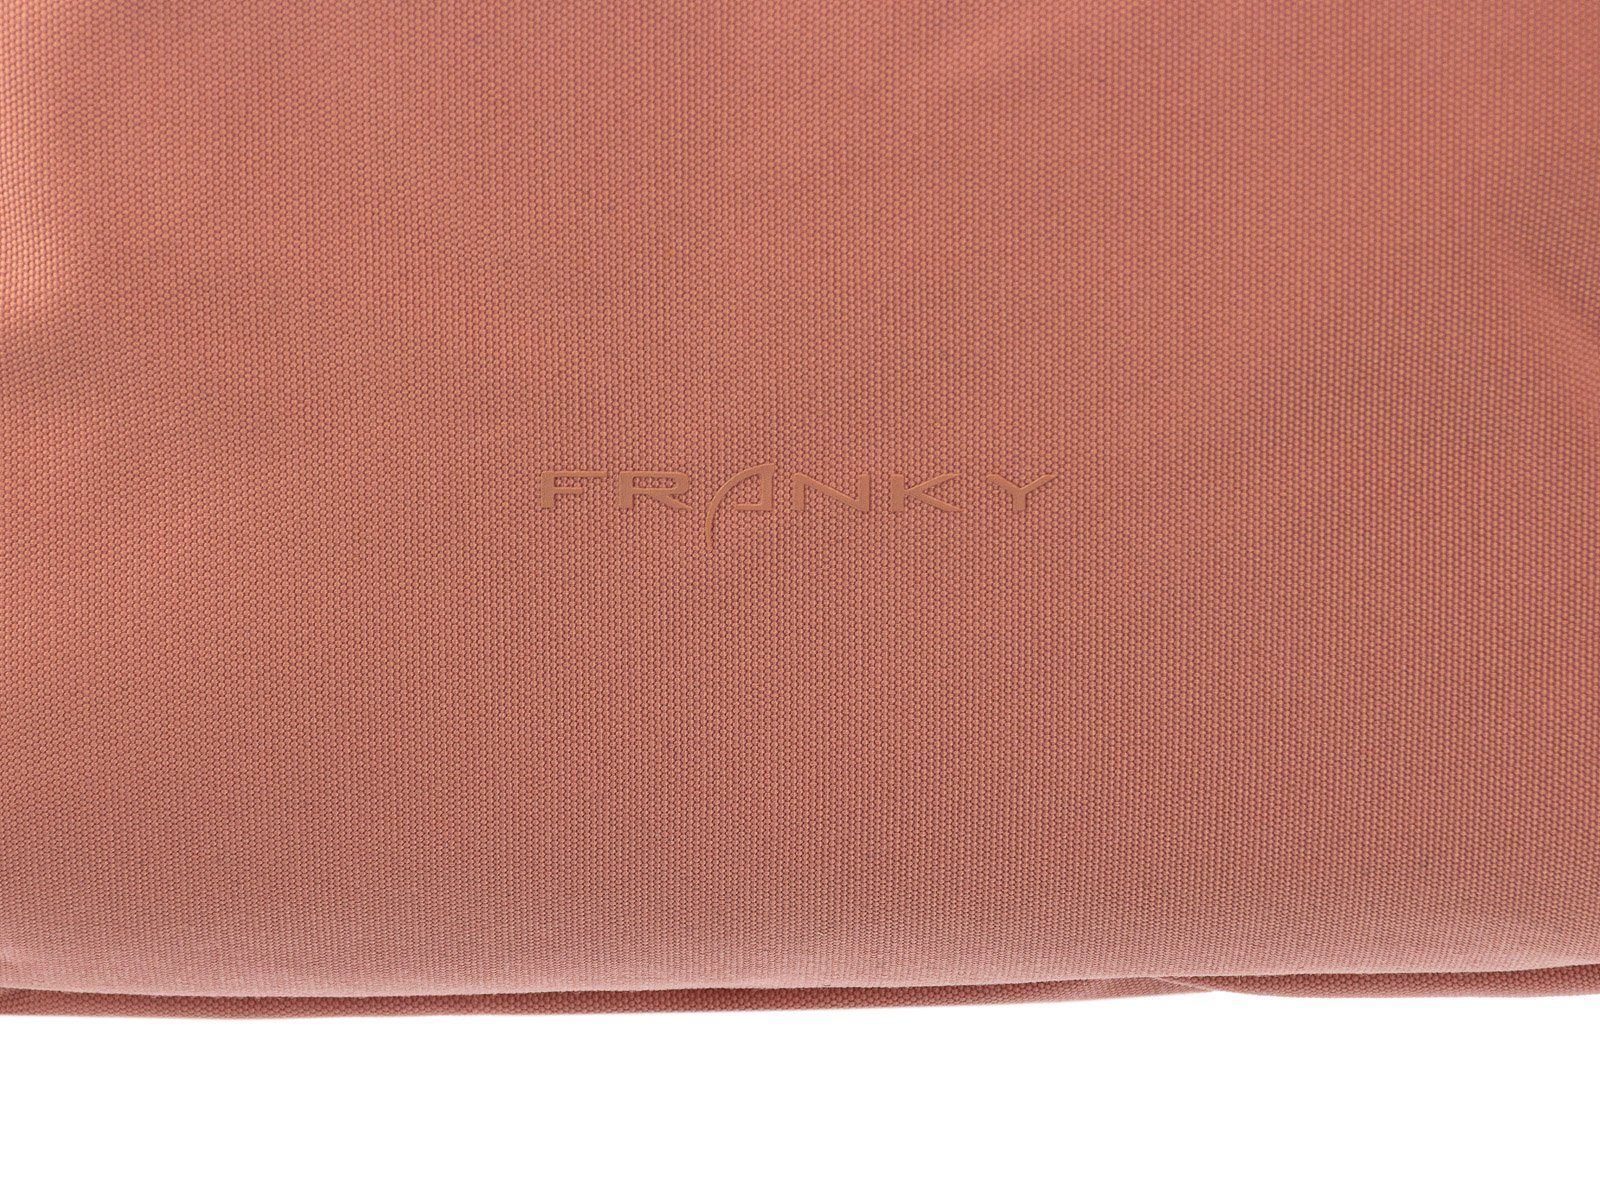 RS84 Freizeitrucksack ca. ca. Franky Freizeitrucksack Notebookfach 13", 13" Laptofach Franky rosa mit